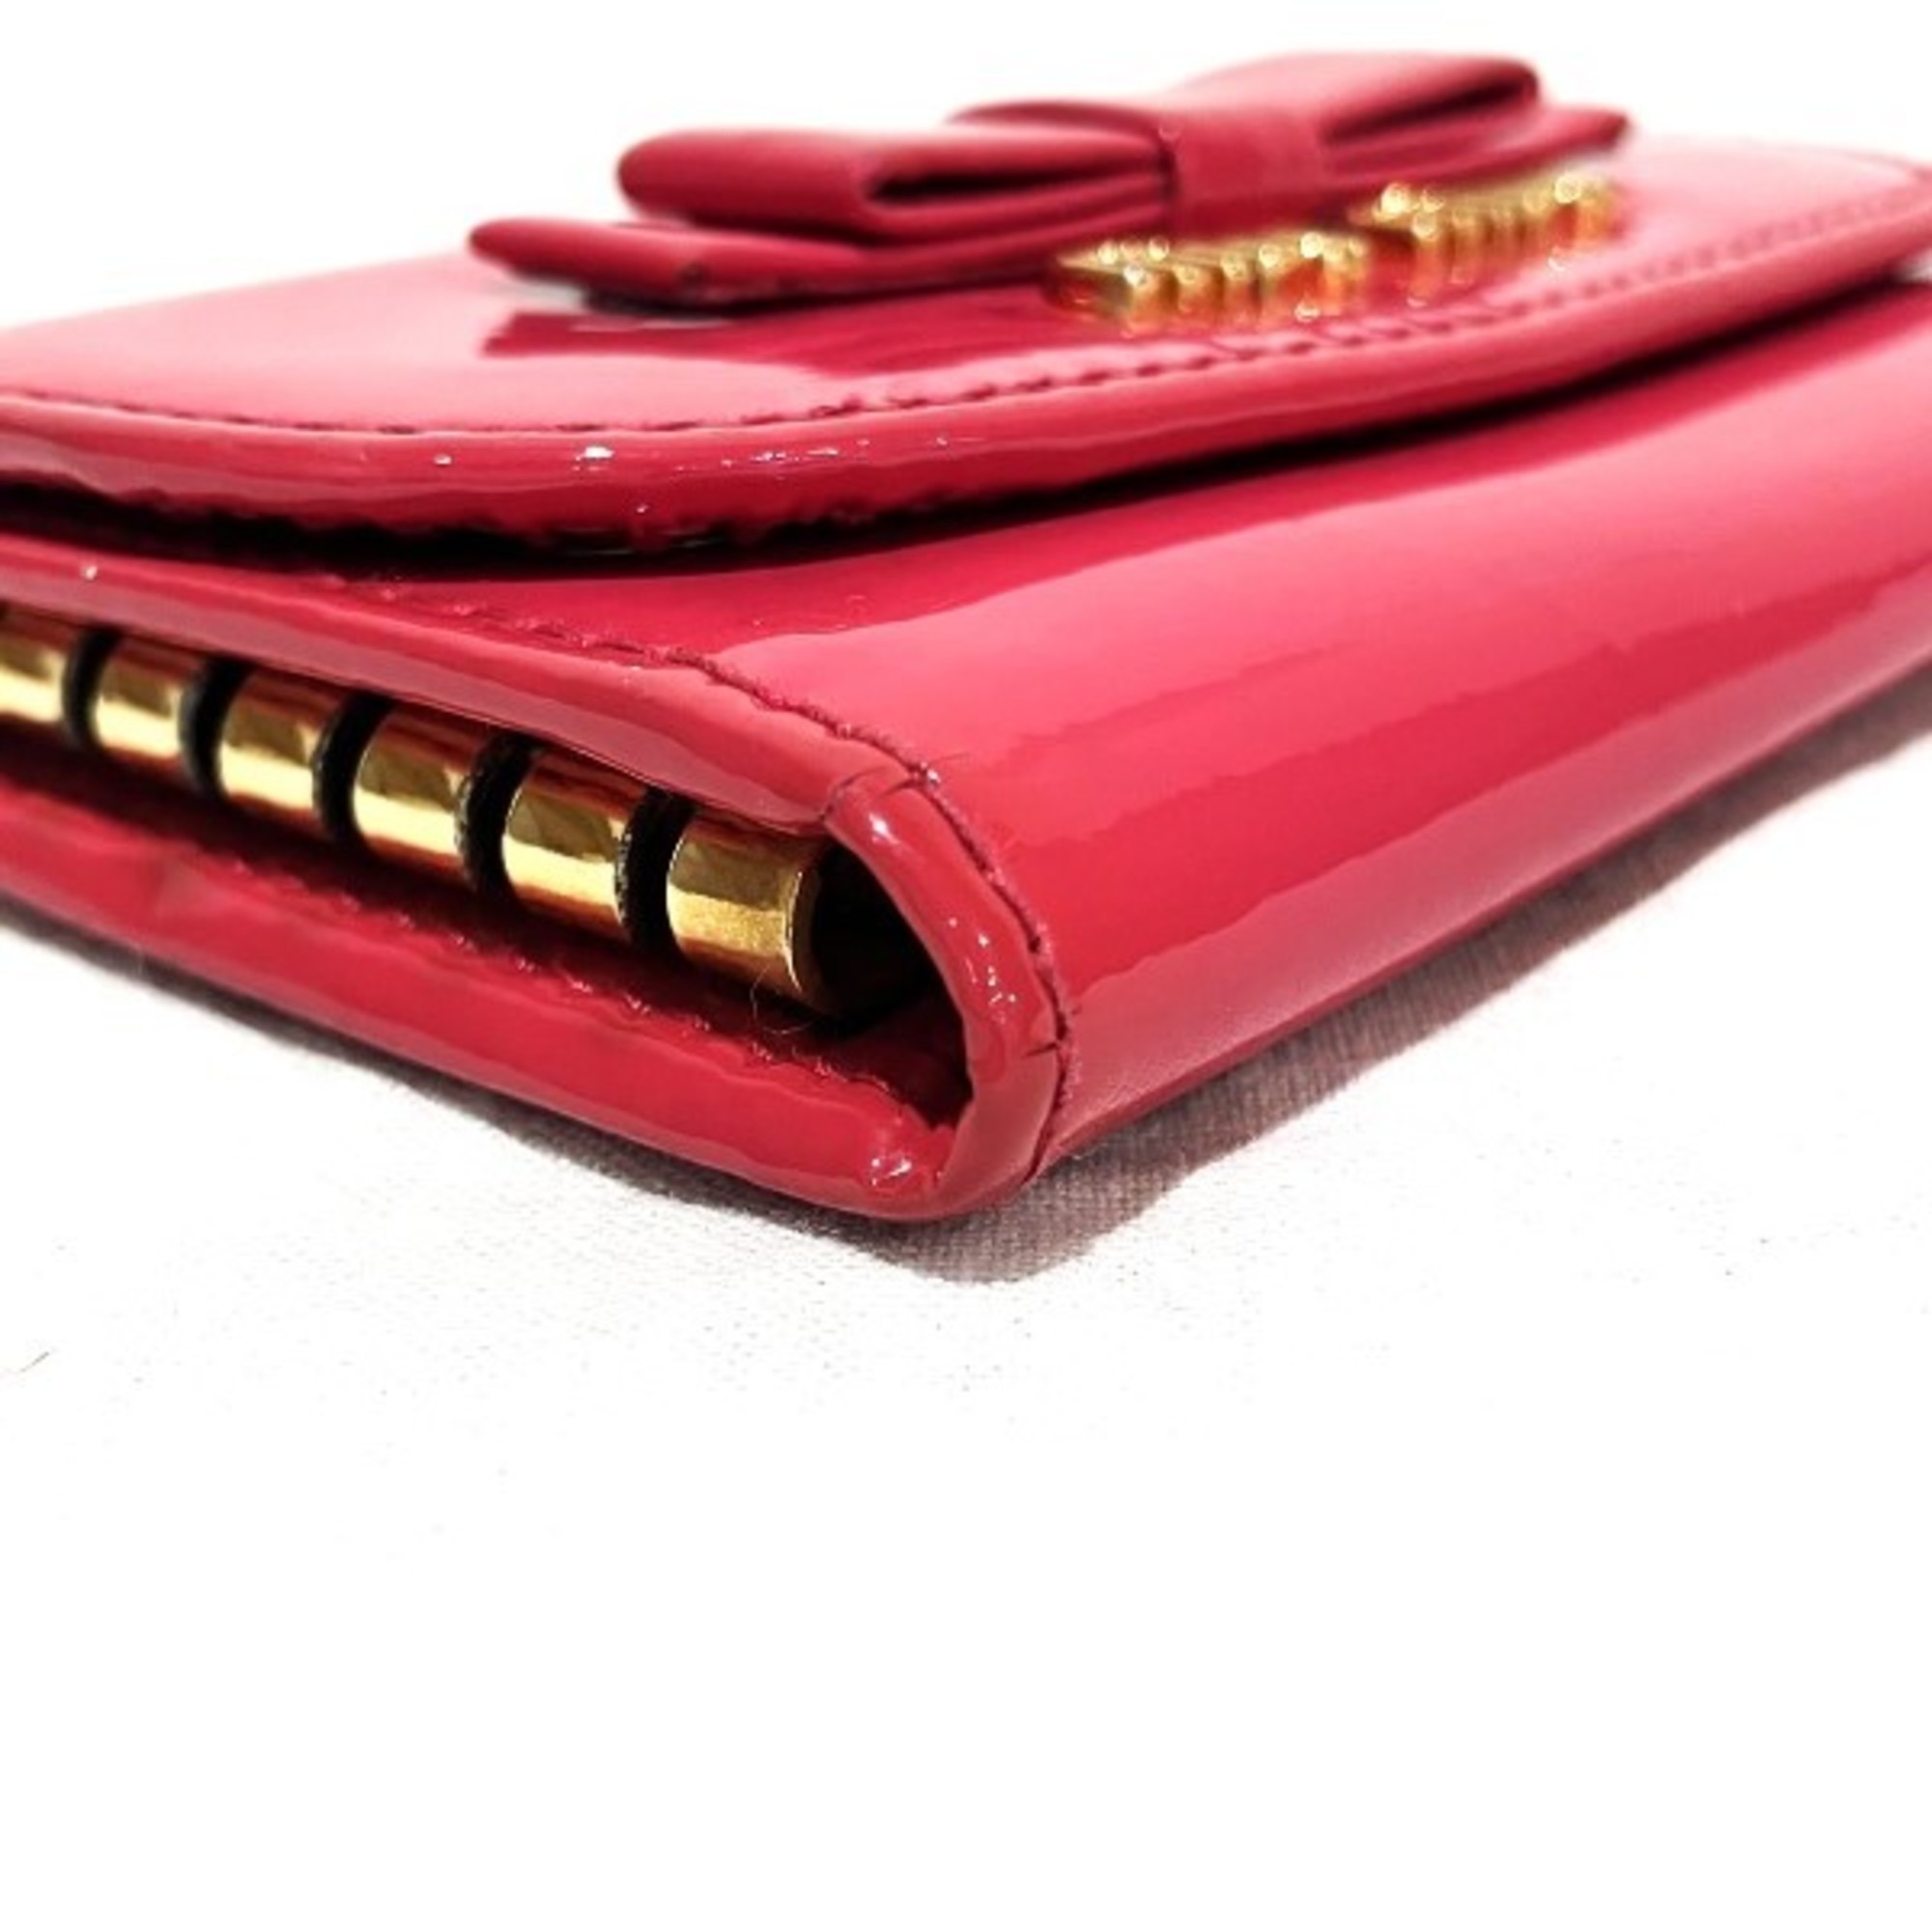 Miu Miu Miu ribbon motif patent leather accessory 6-ring key case for women